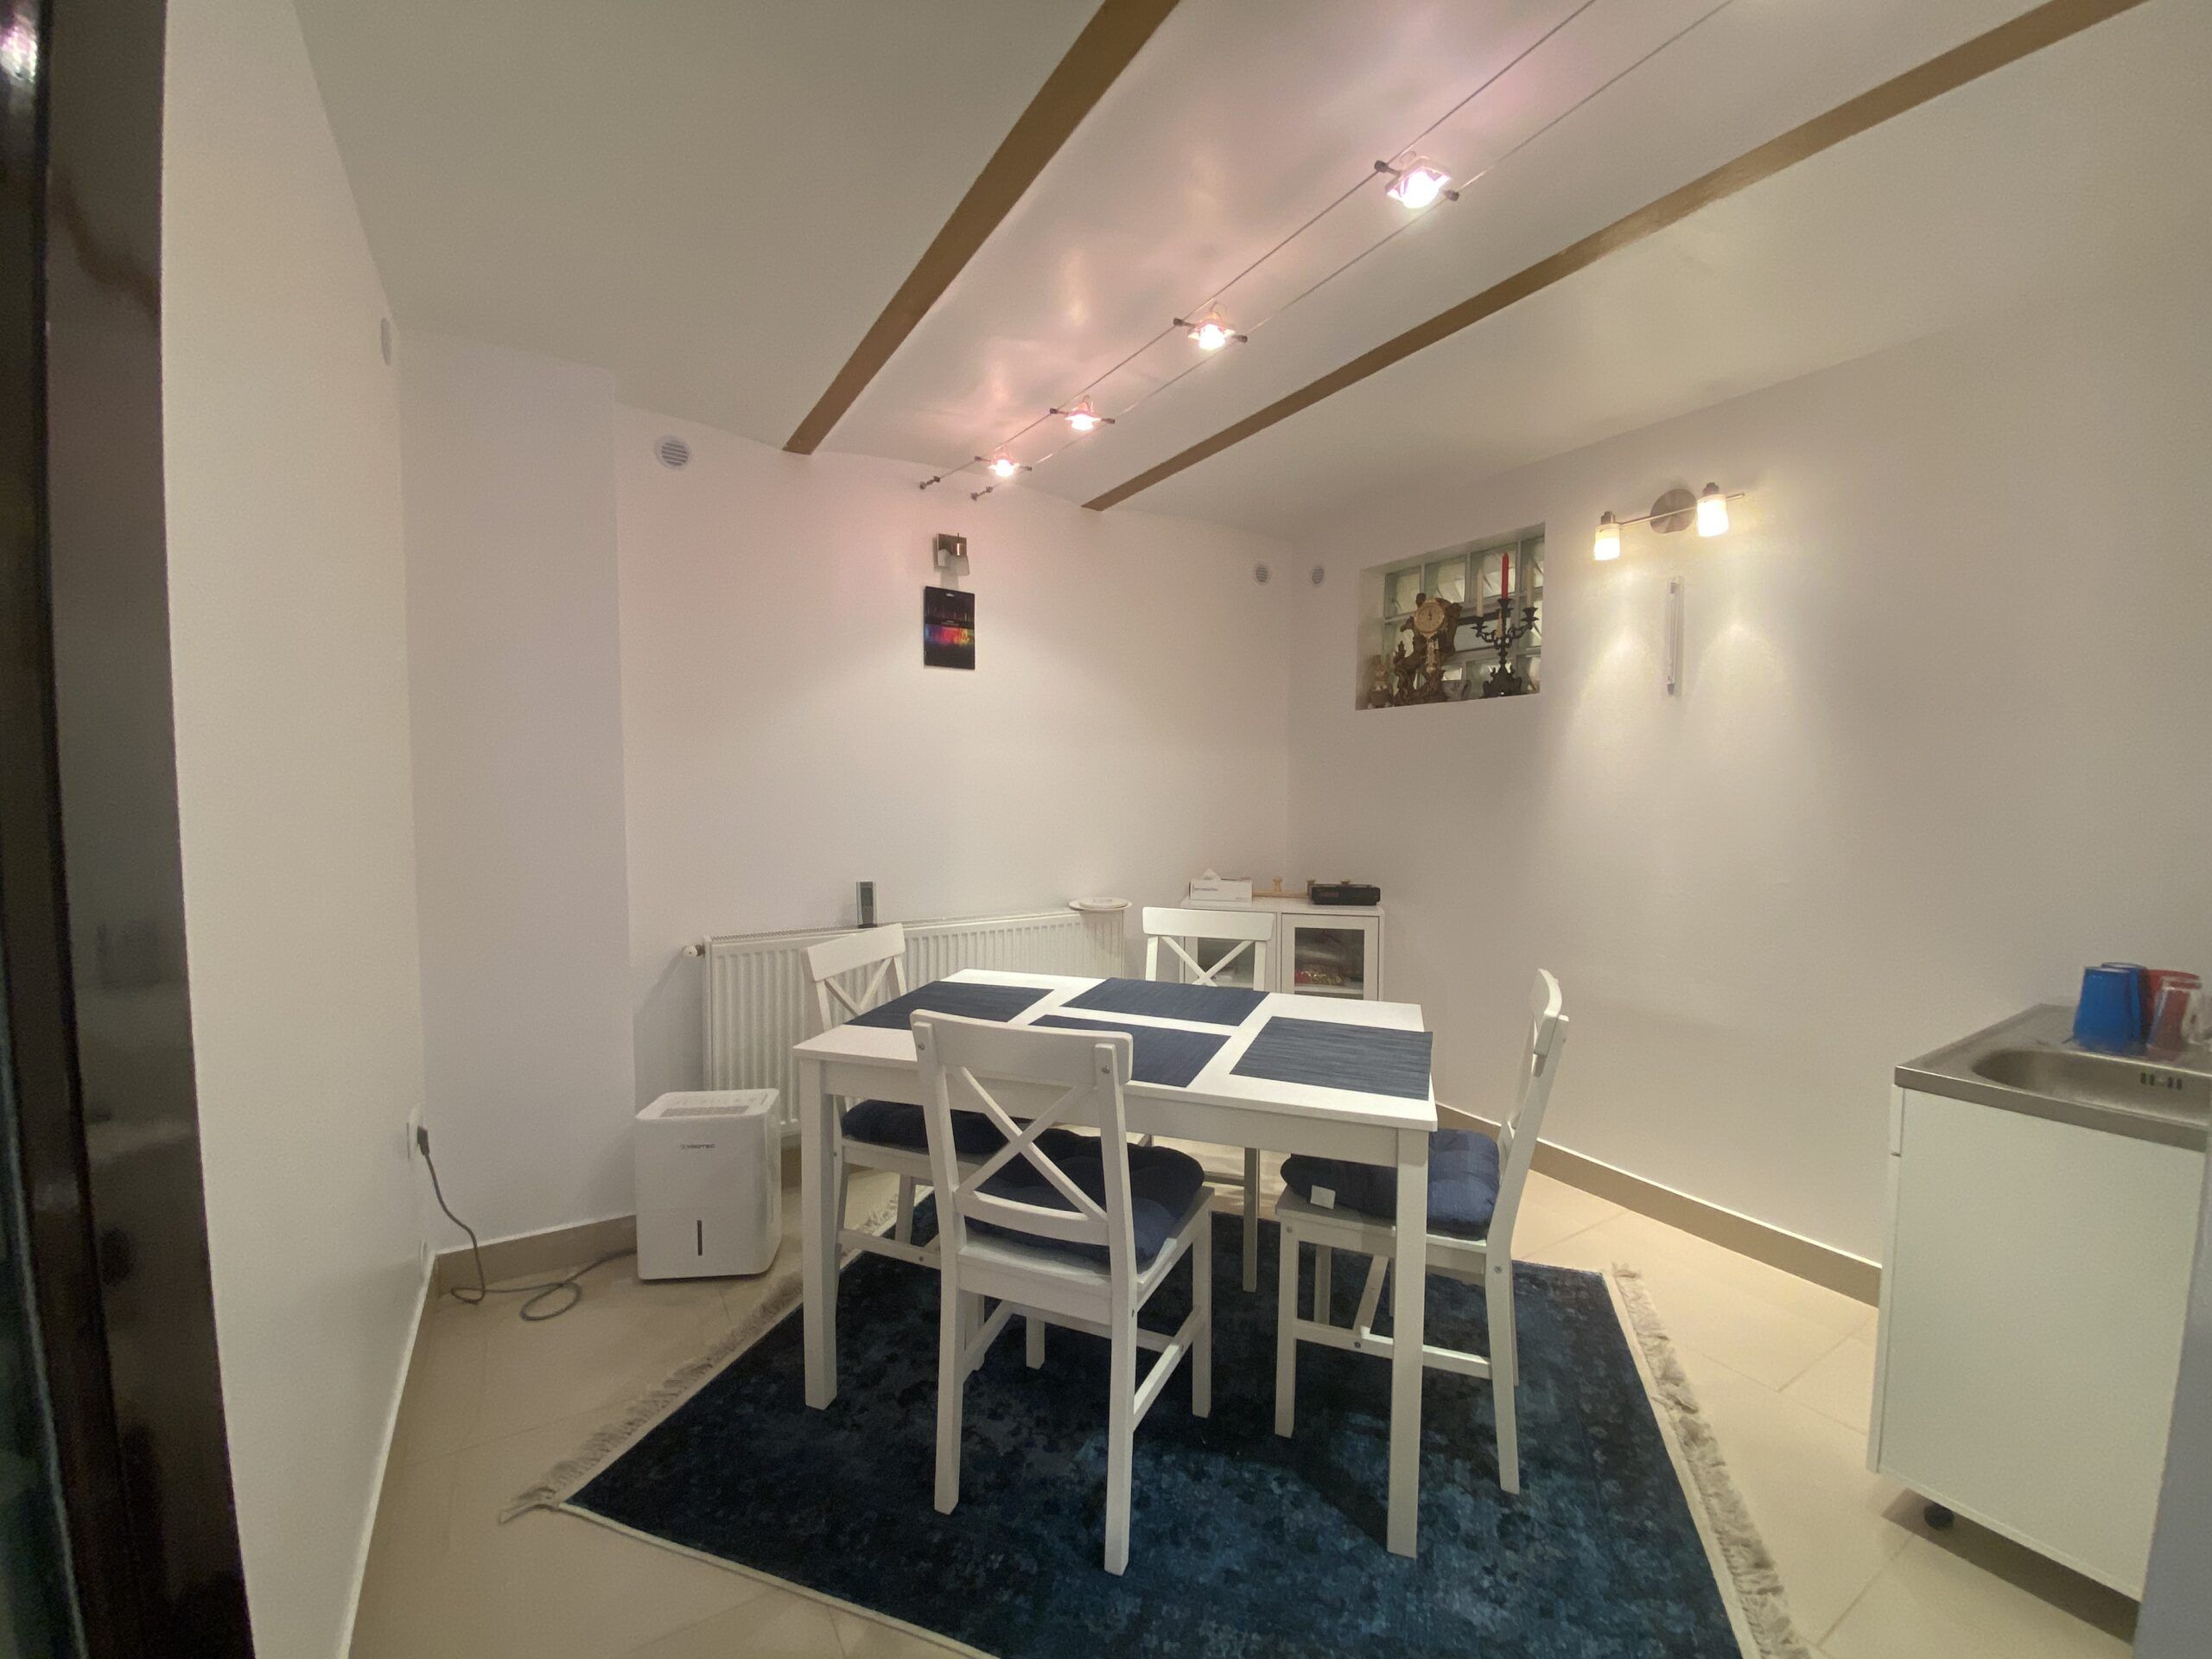 Oferta: doua apartamente renovate si mobilate, 145 mp teren,str Rennes